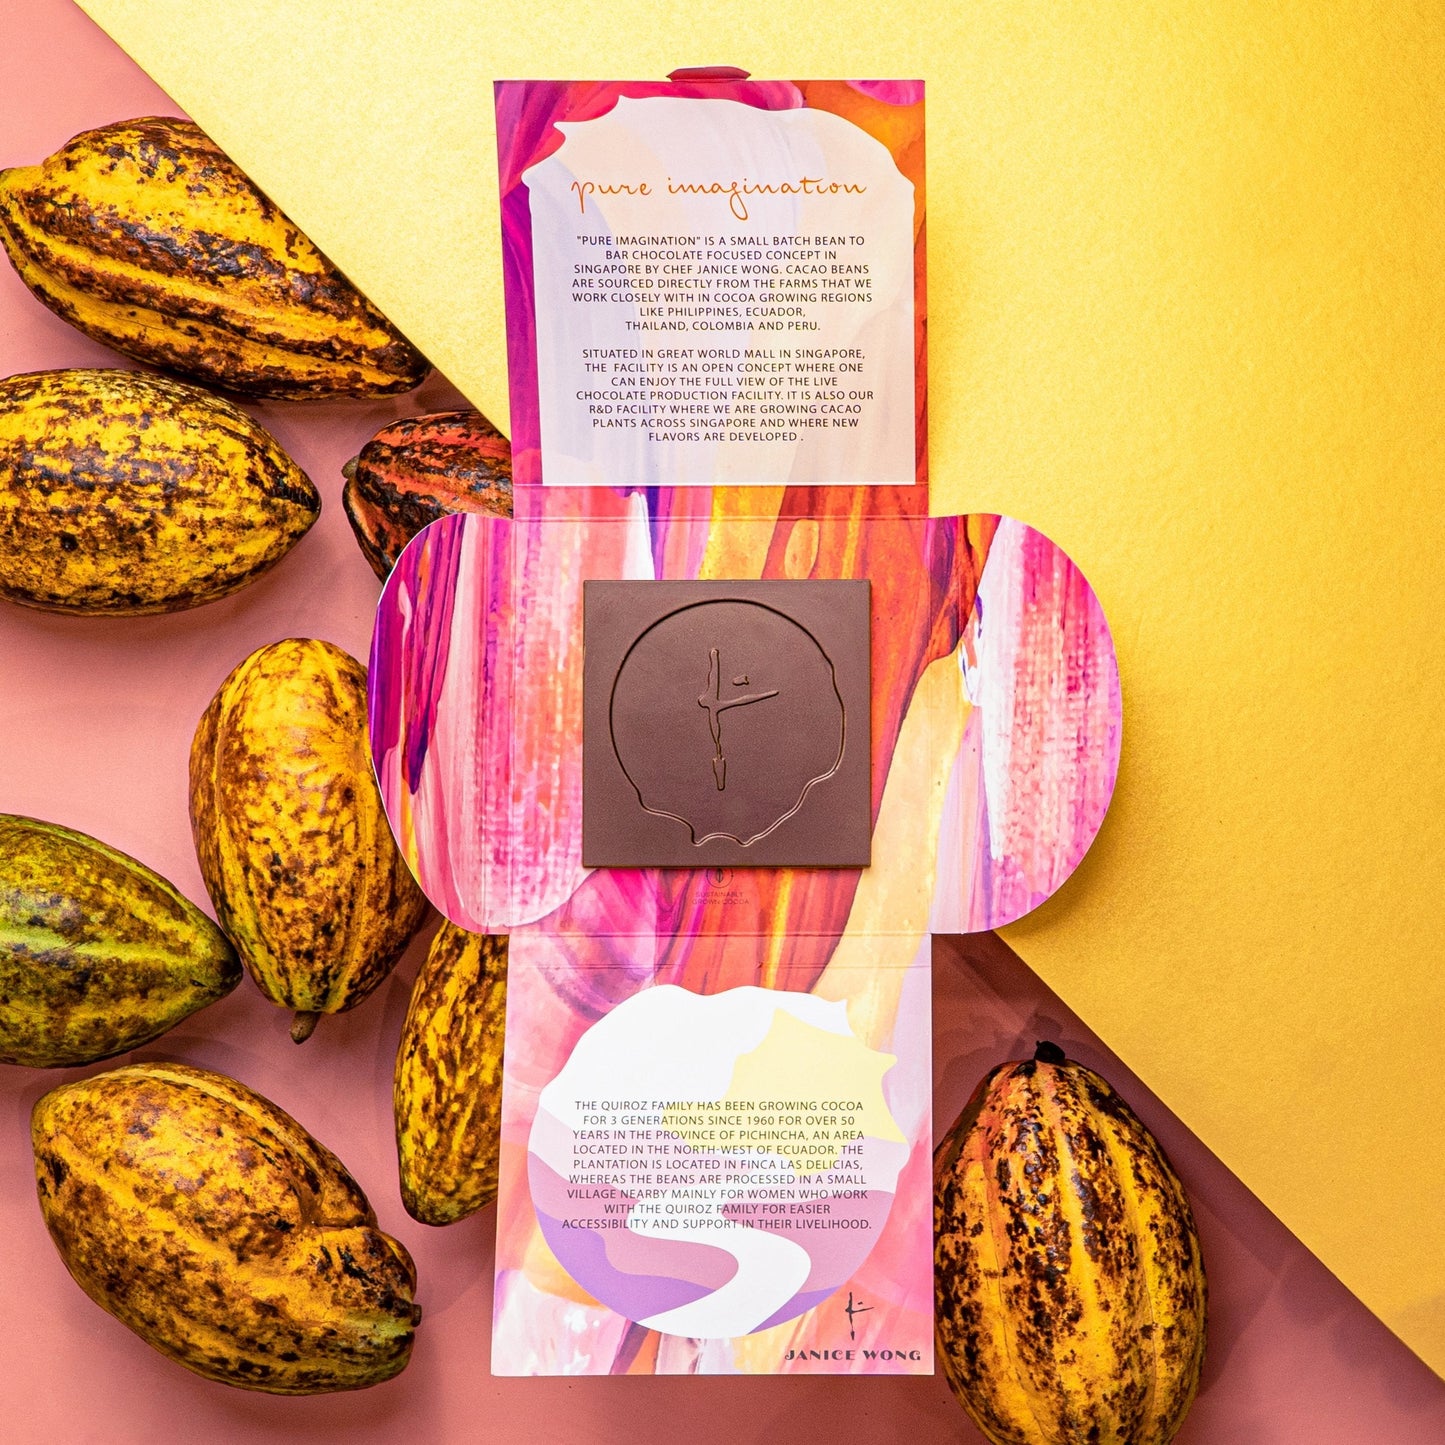 55% Ecuador Single Origin Bean to Bar Milk Chocolate